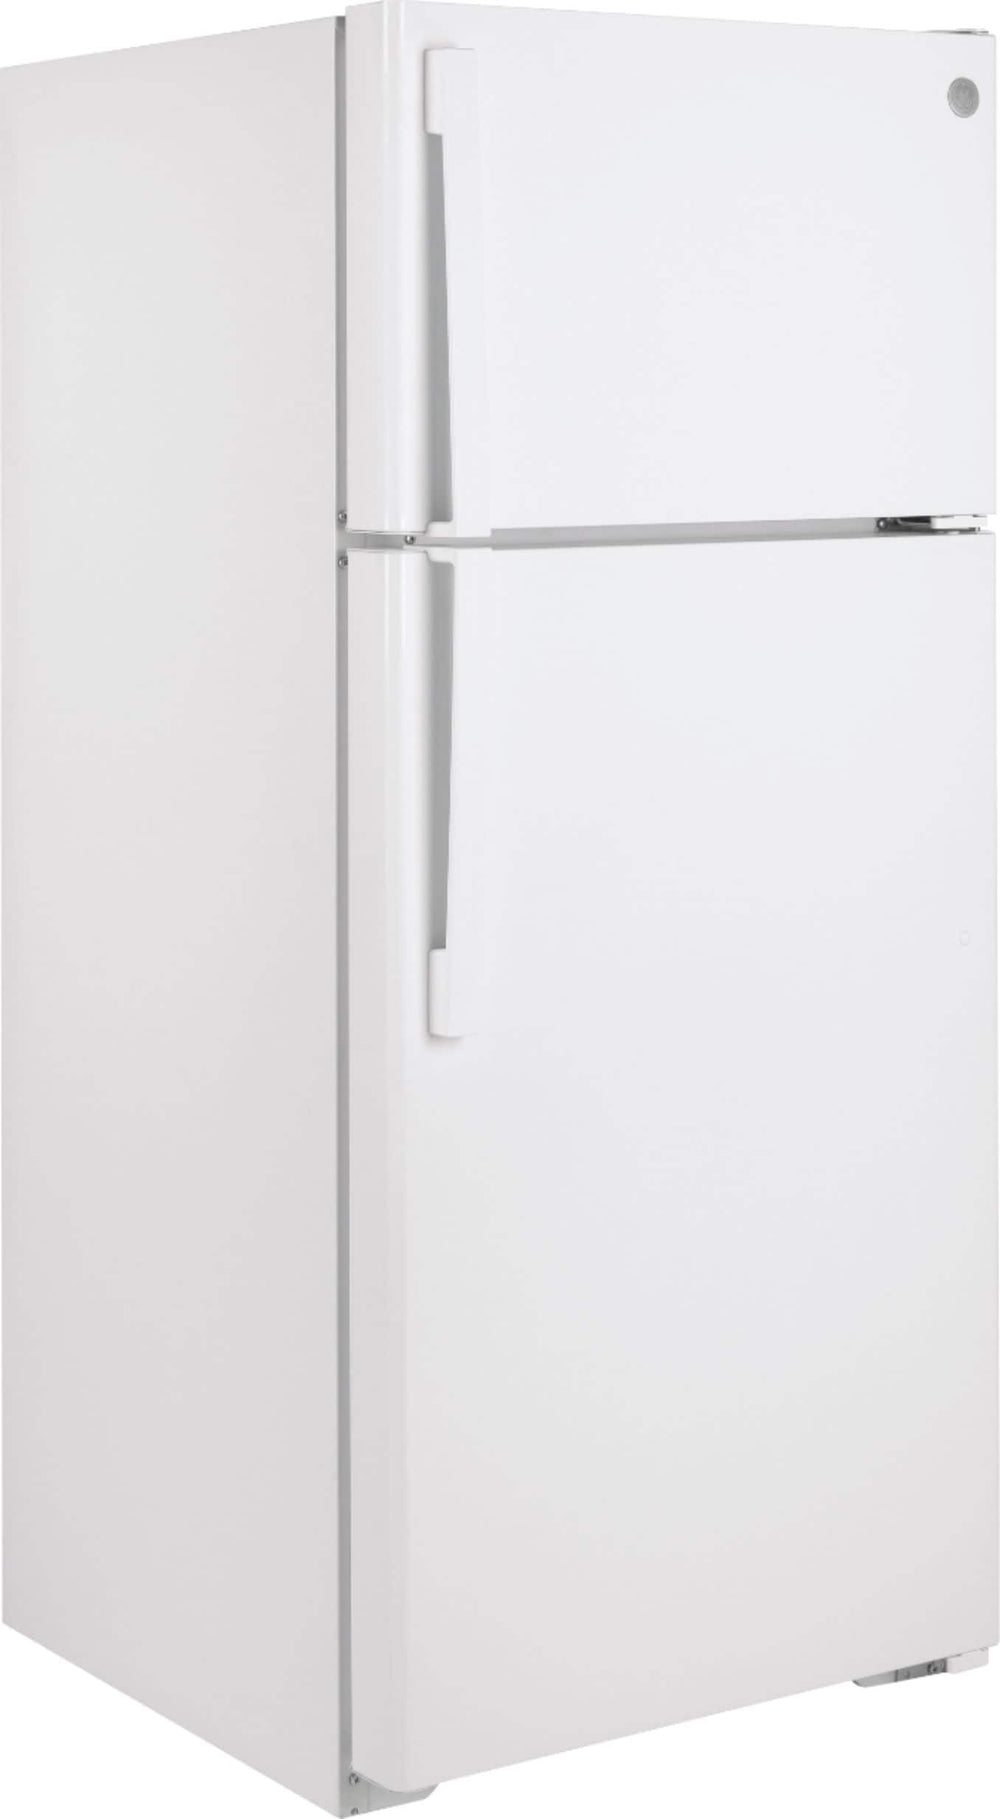 GE - 16.6 Cu. Ft. Top-Freezer Refrigerator - White_1